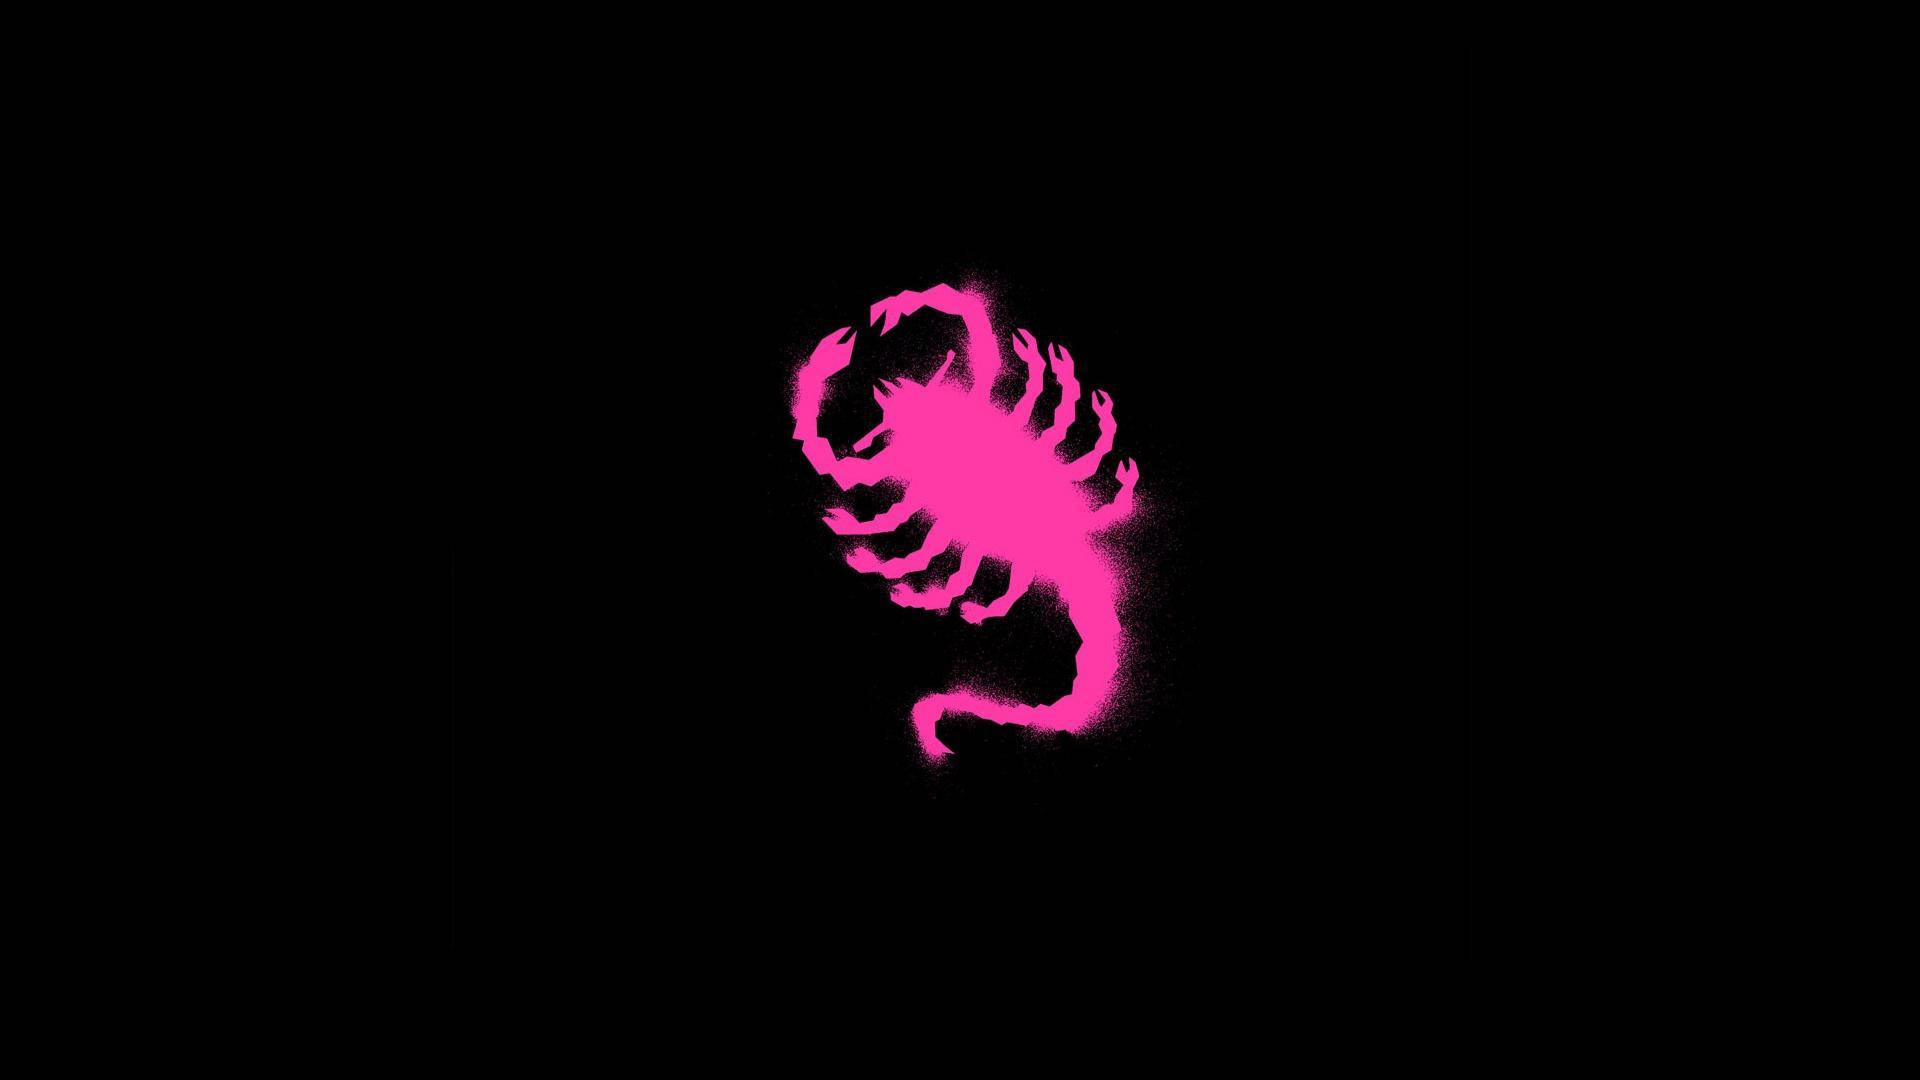 Scorpion Pink Aesthetic On Black Wallpaper